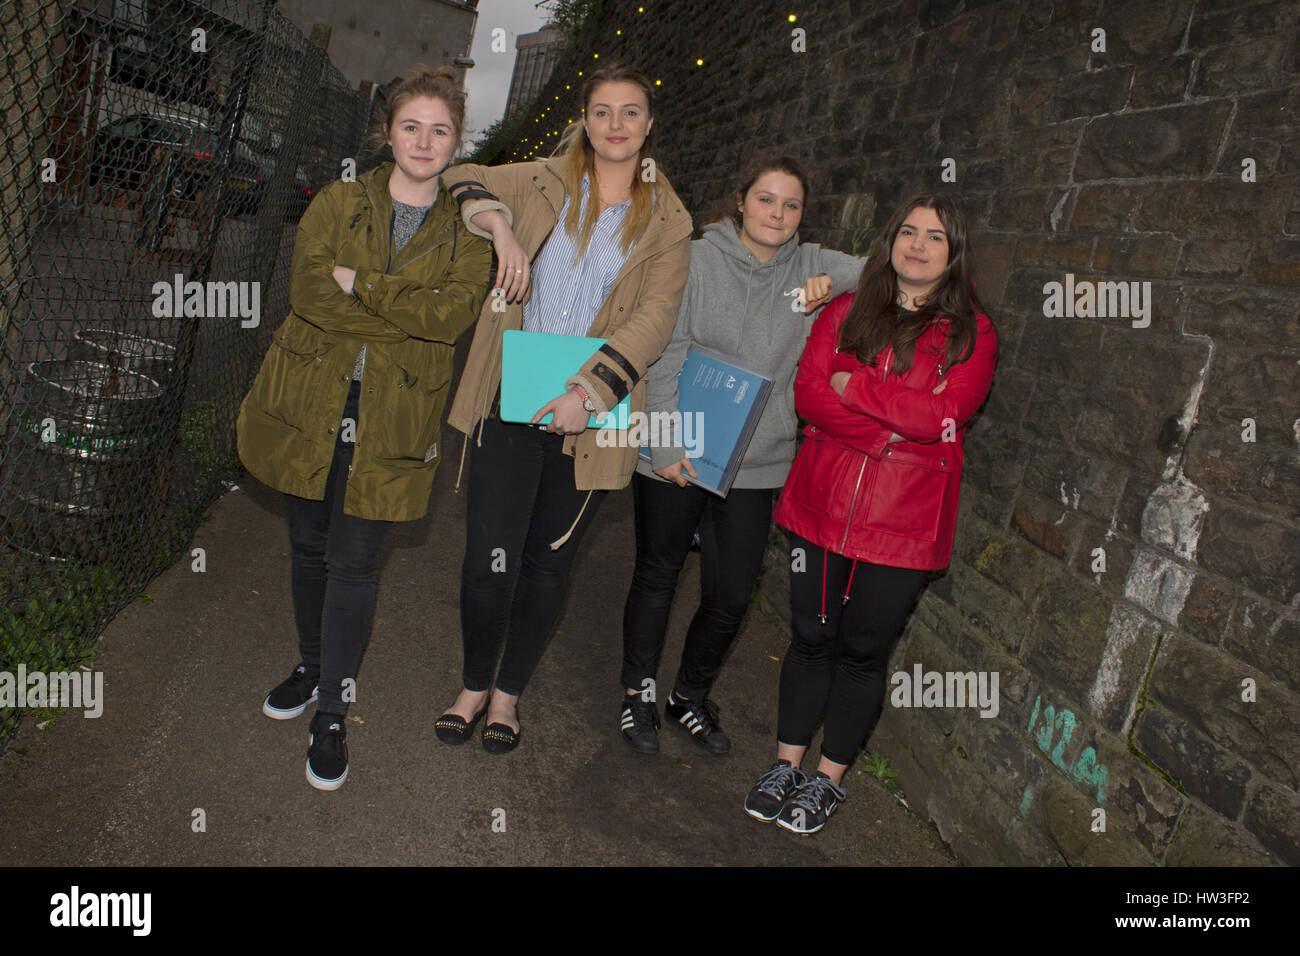 Cardiff, Wales. 16th March, 2017. Anna Williams, Angharad Stone, Ella-Mai Bastida Williams, and Katie Williams are second year graphic design students. Stock Photo